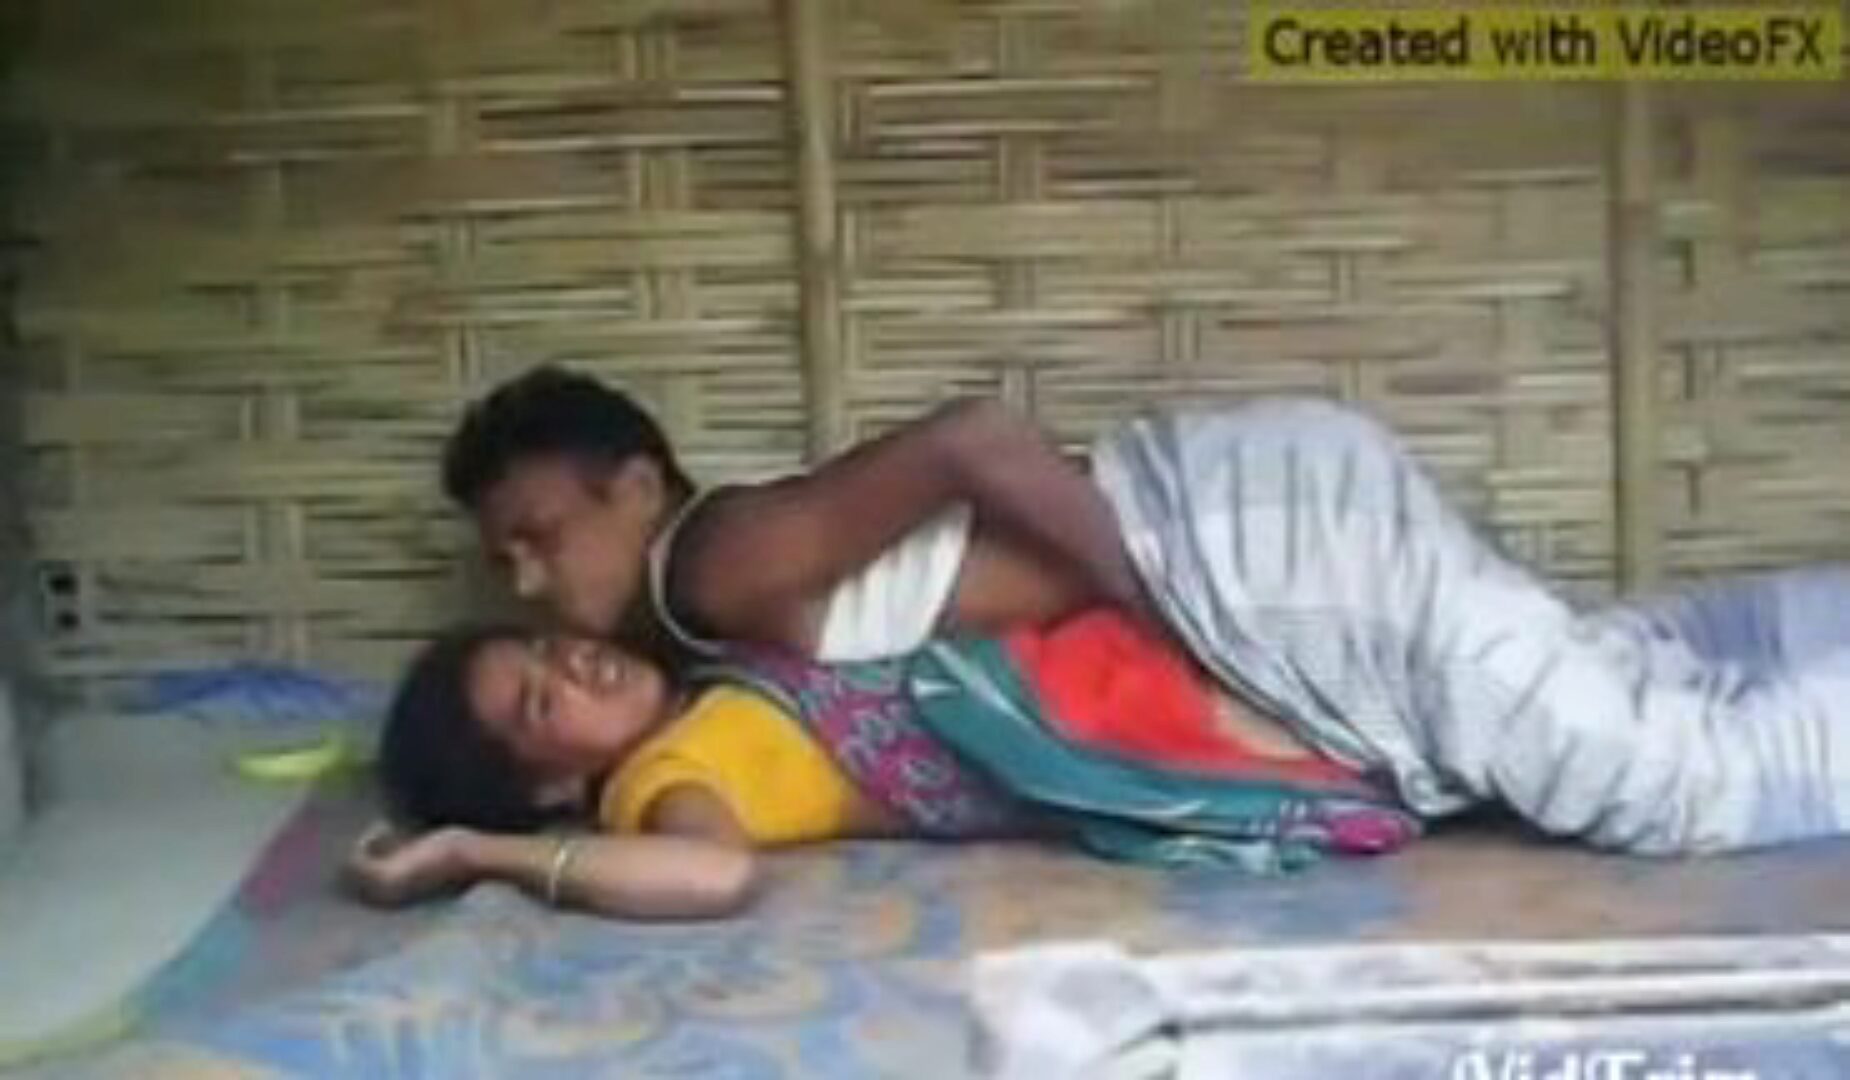 Bangla nygifte sex Porno bilder Hd